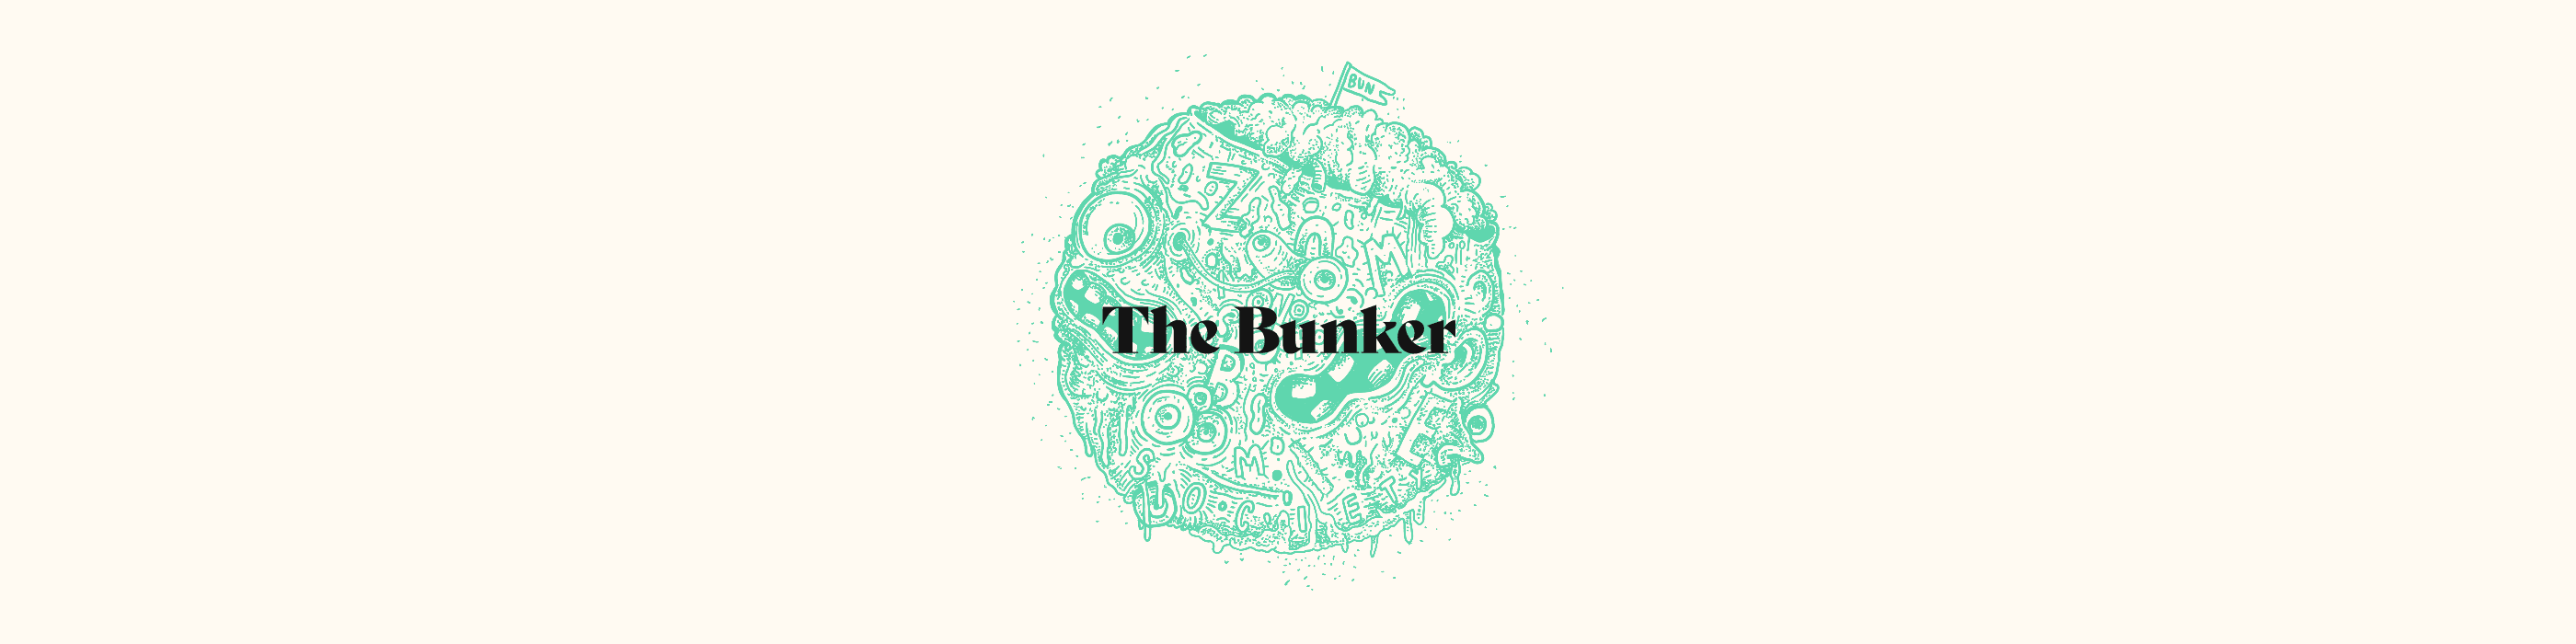 The_Bunker 横幅